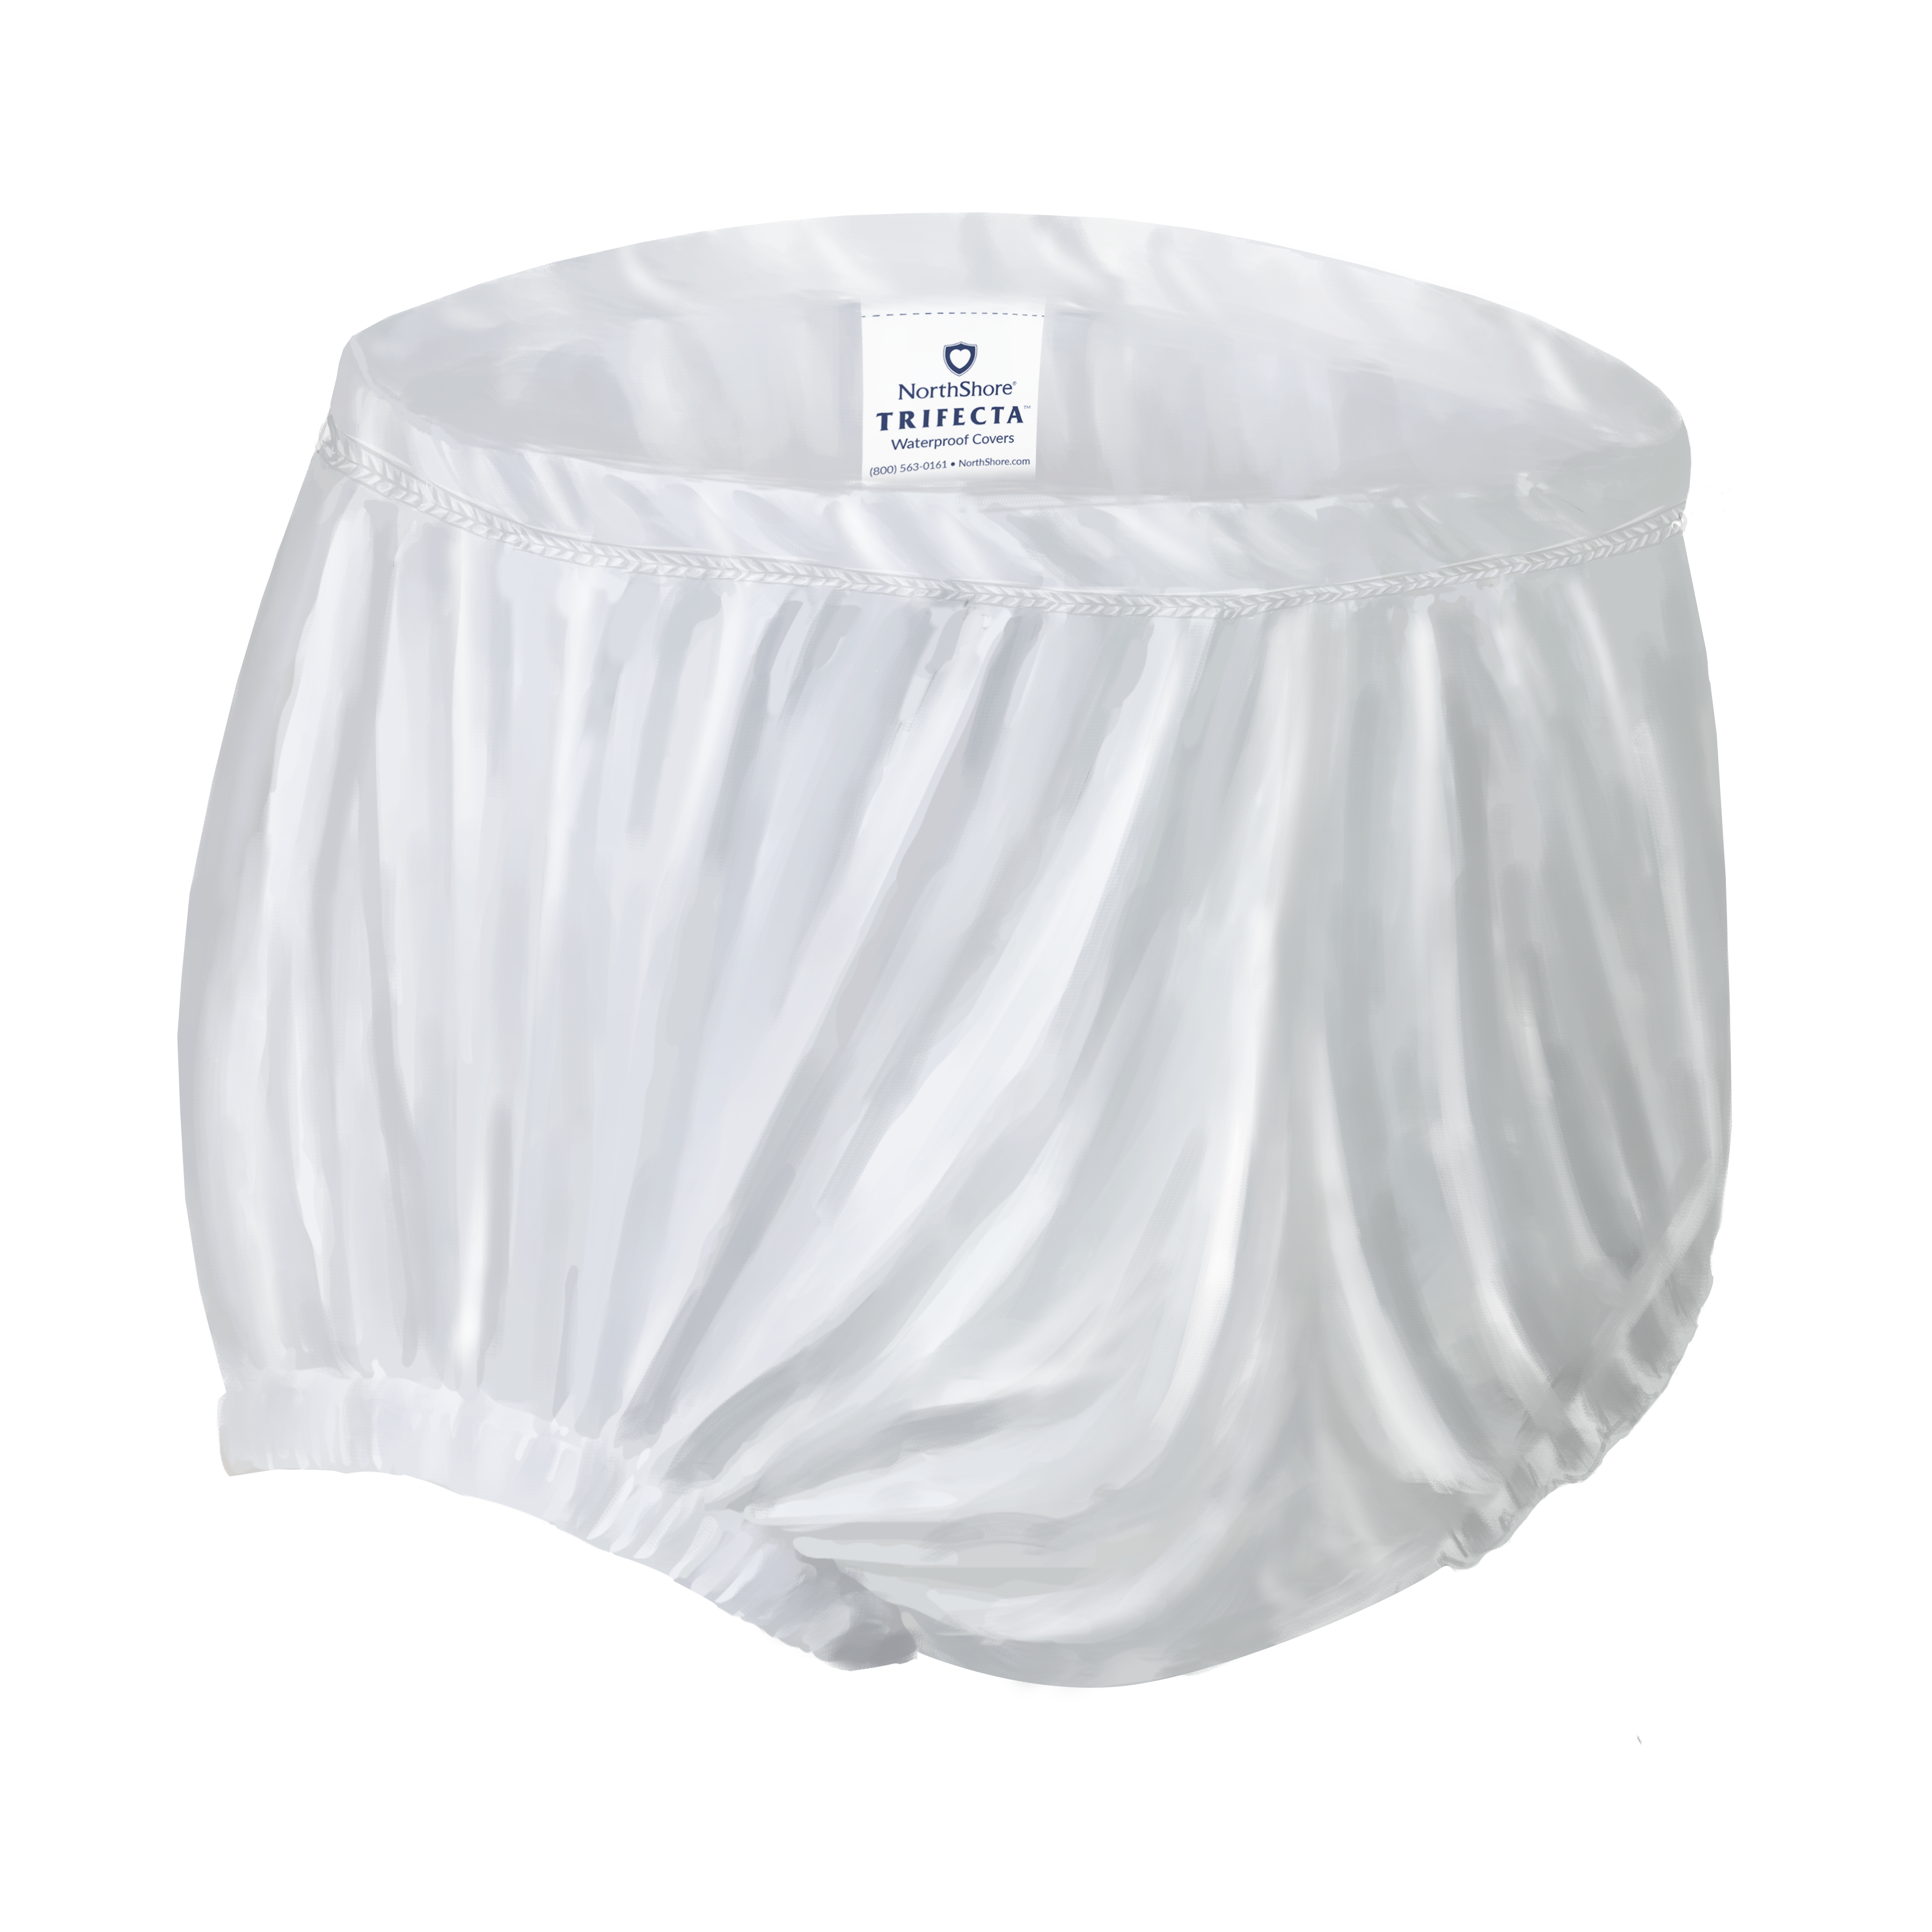 Adult Diaper Covers  Adult Plastic Pants & Waterproof Diaper Covers at  Vitality Medical